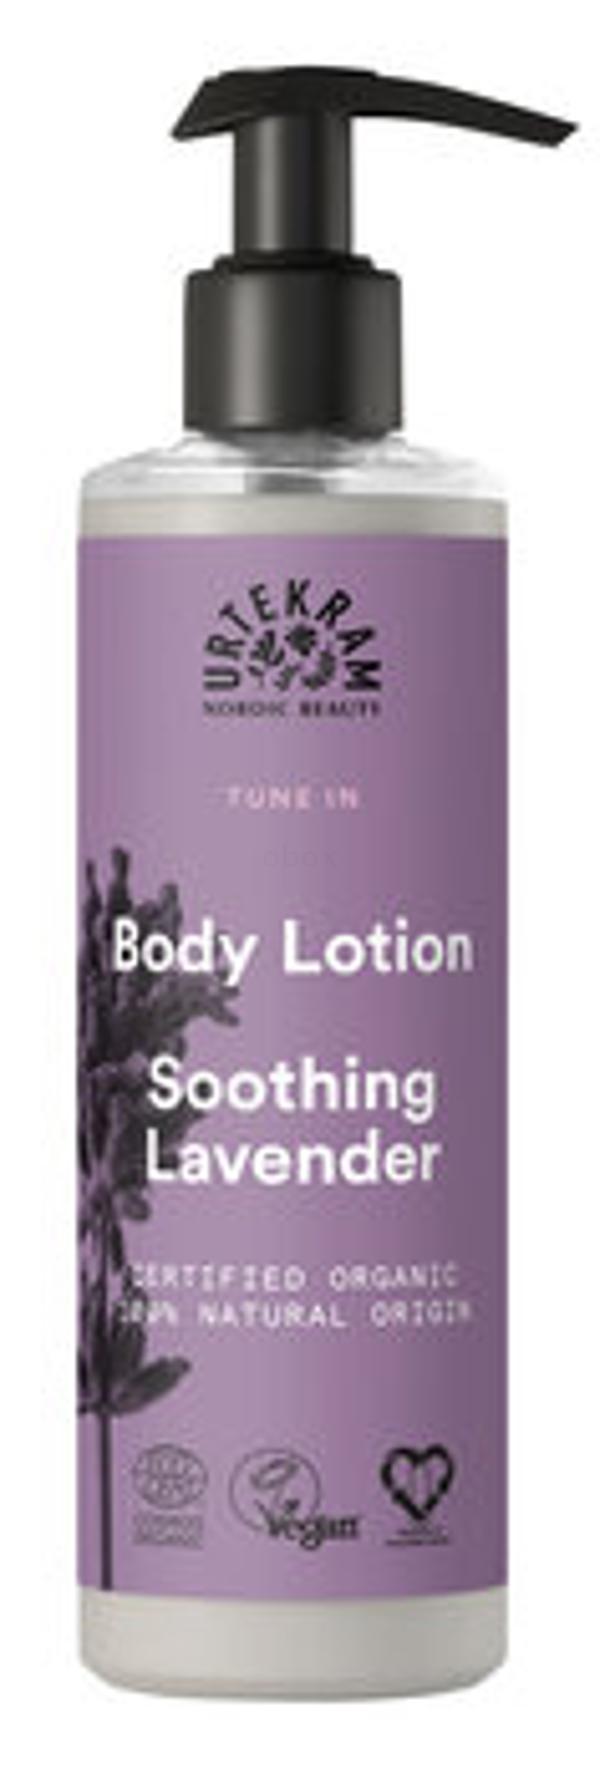 Produktfoto zu Soothing Laven. Body Lotion